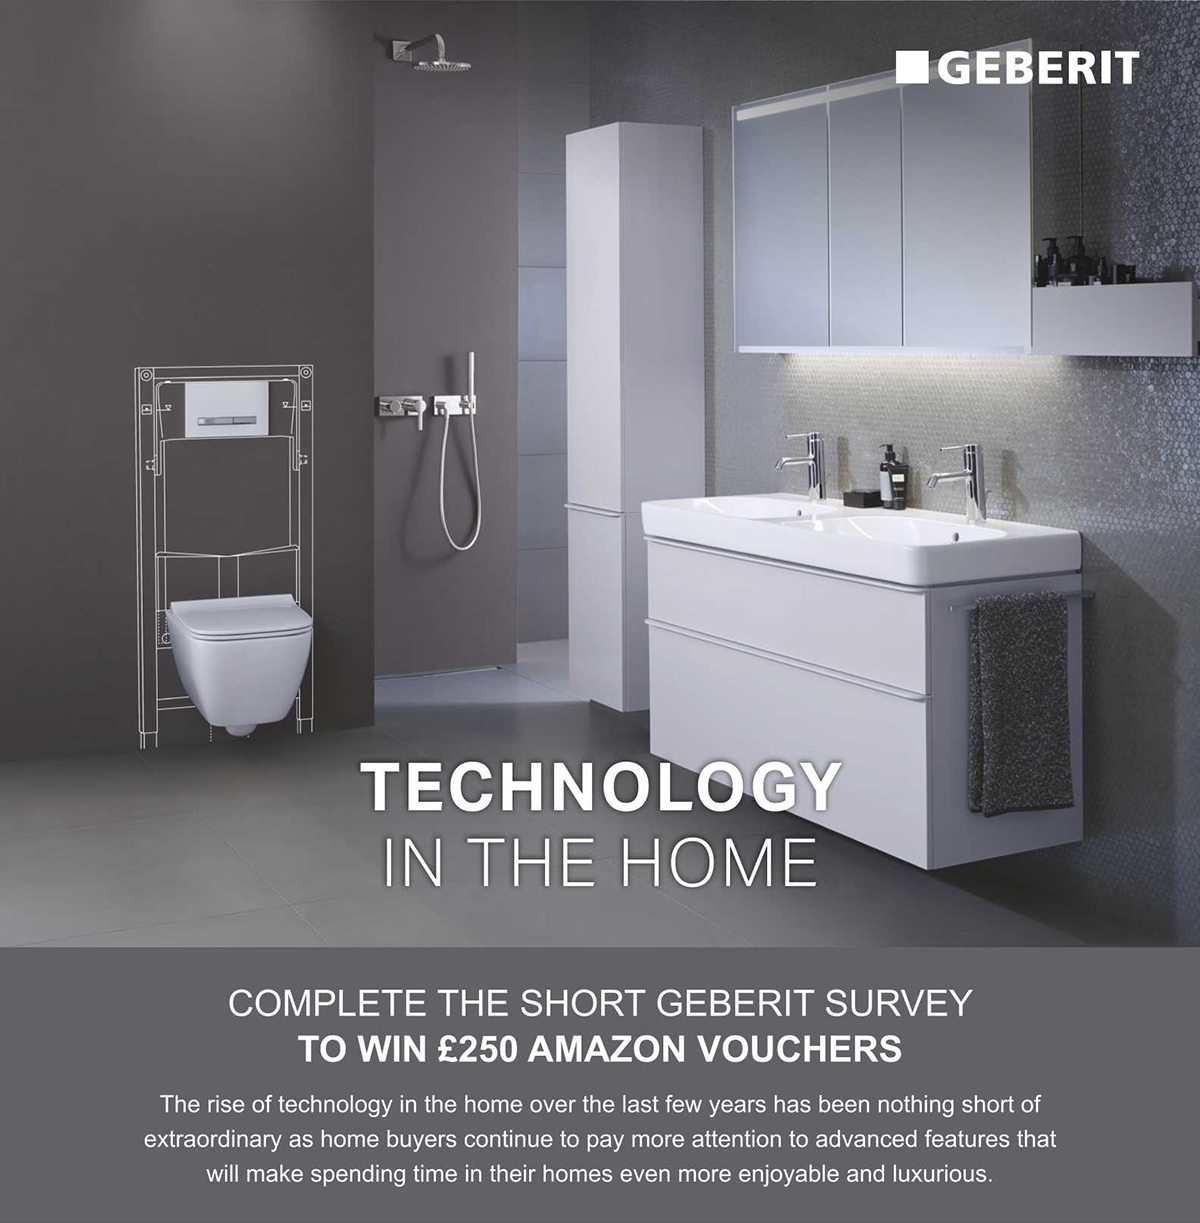 Take Geberit’s home technology survey